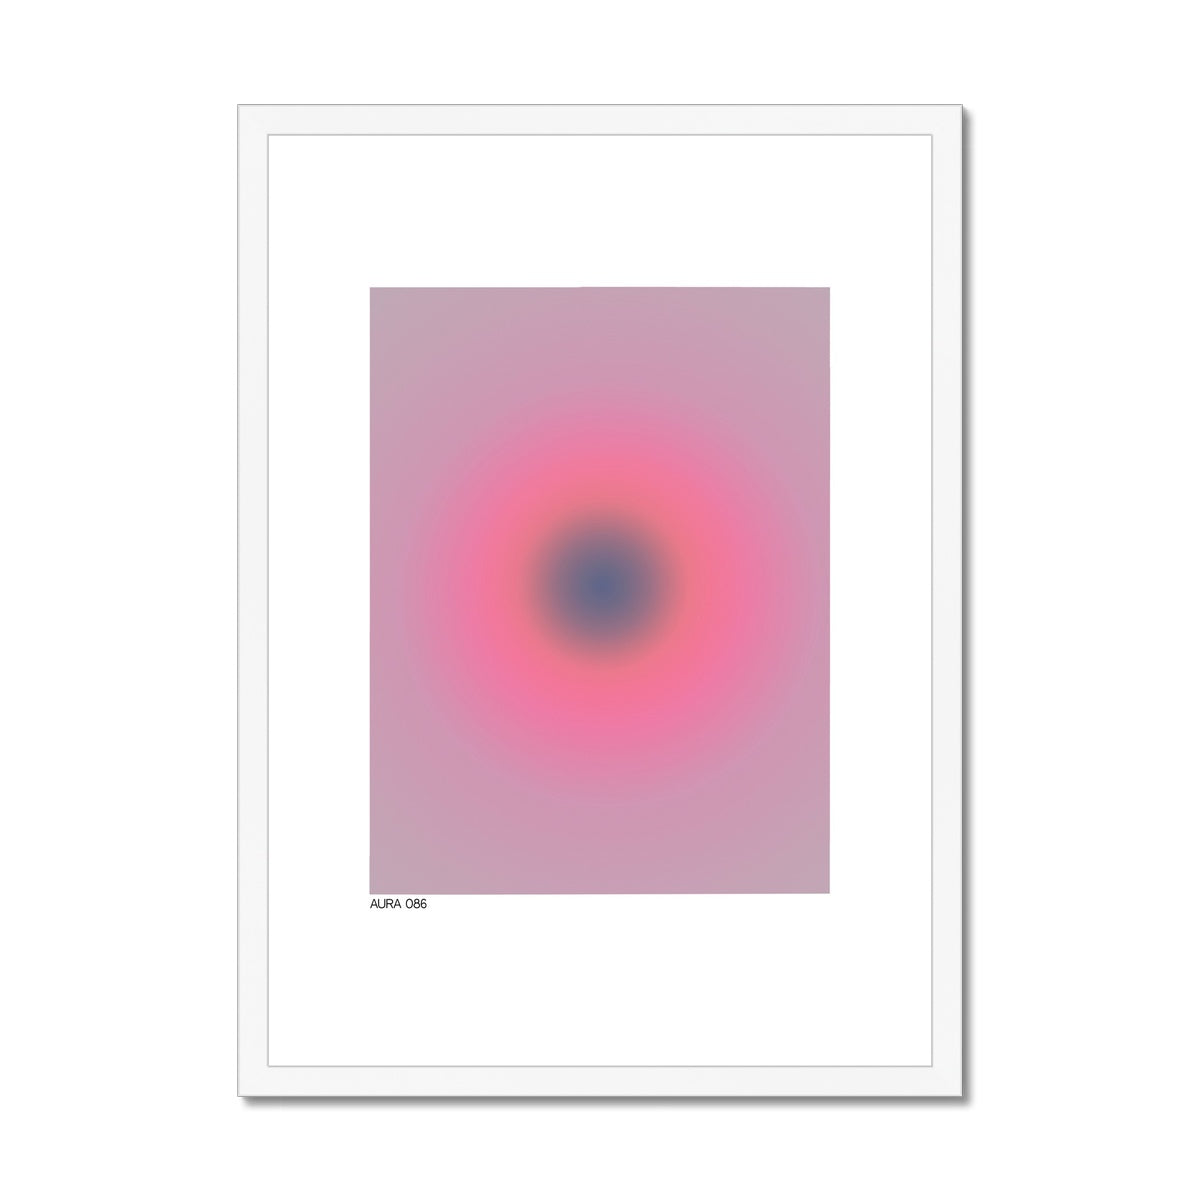 aura 086 Framed & Mounted Print